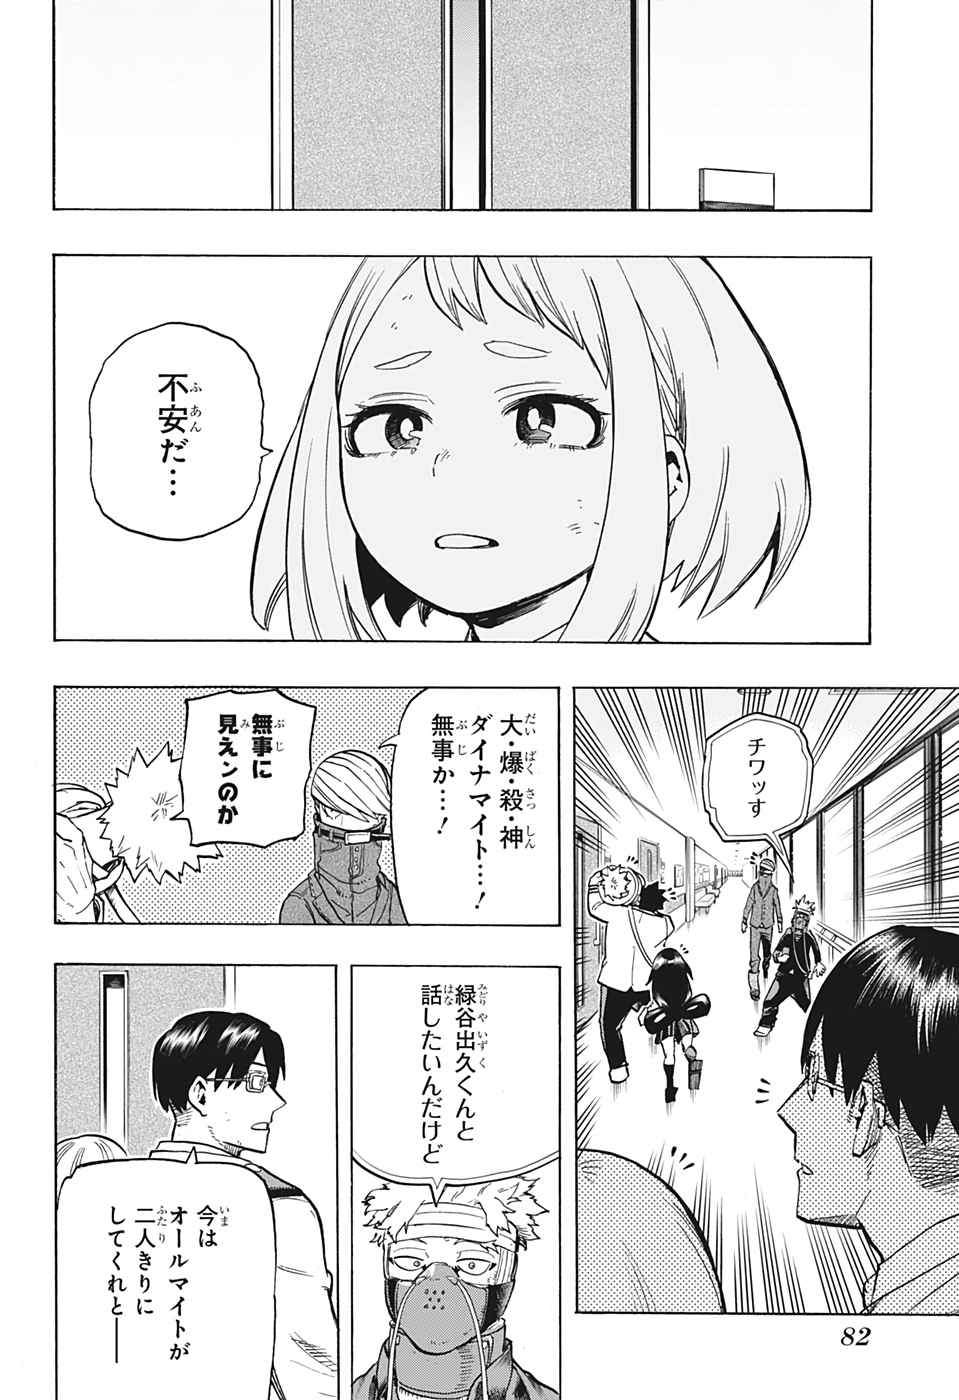 Boku no Hero Academia - Chapter 303 - Page 14